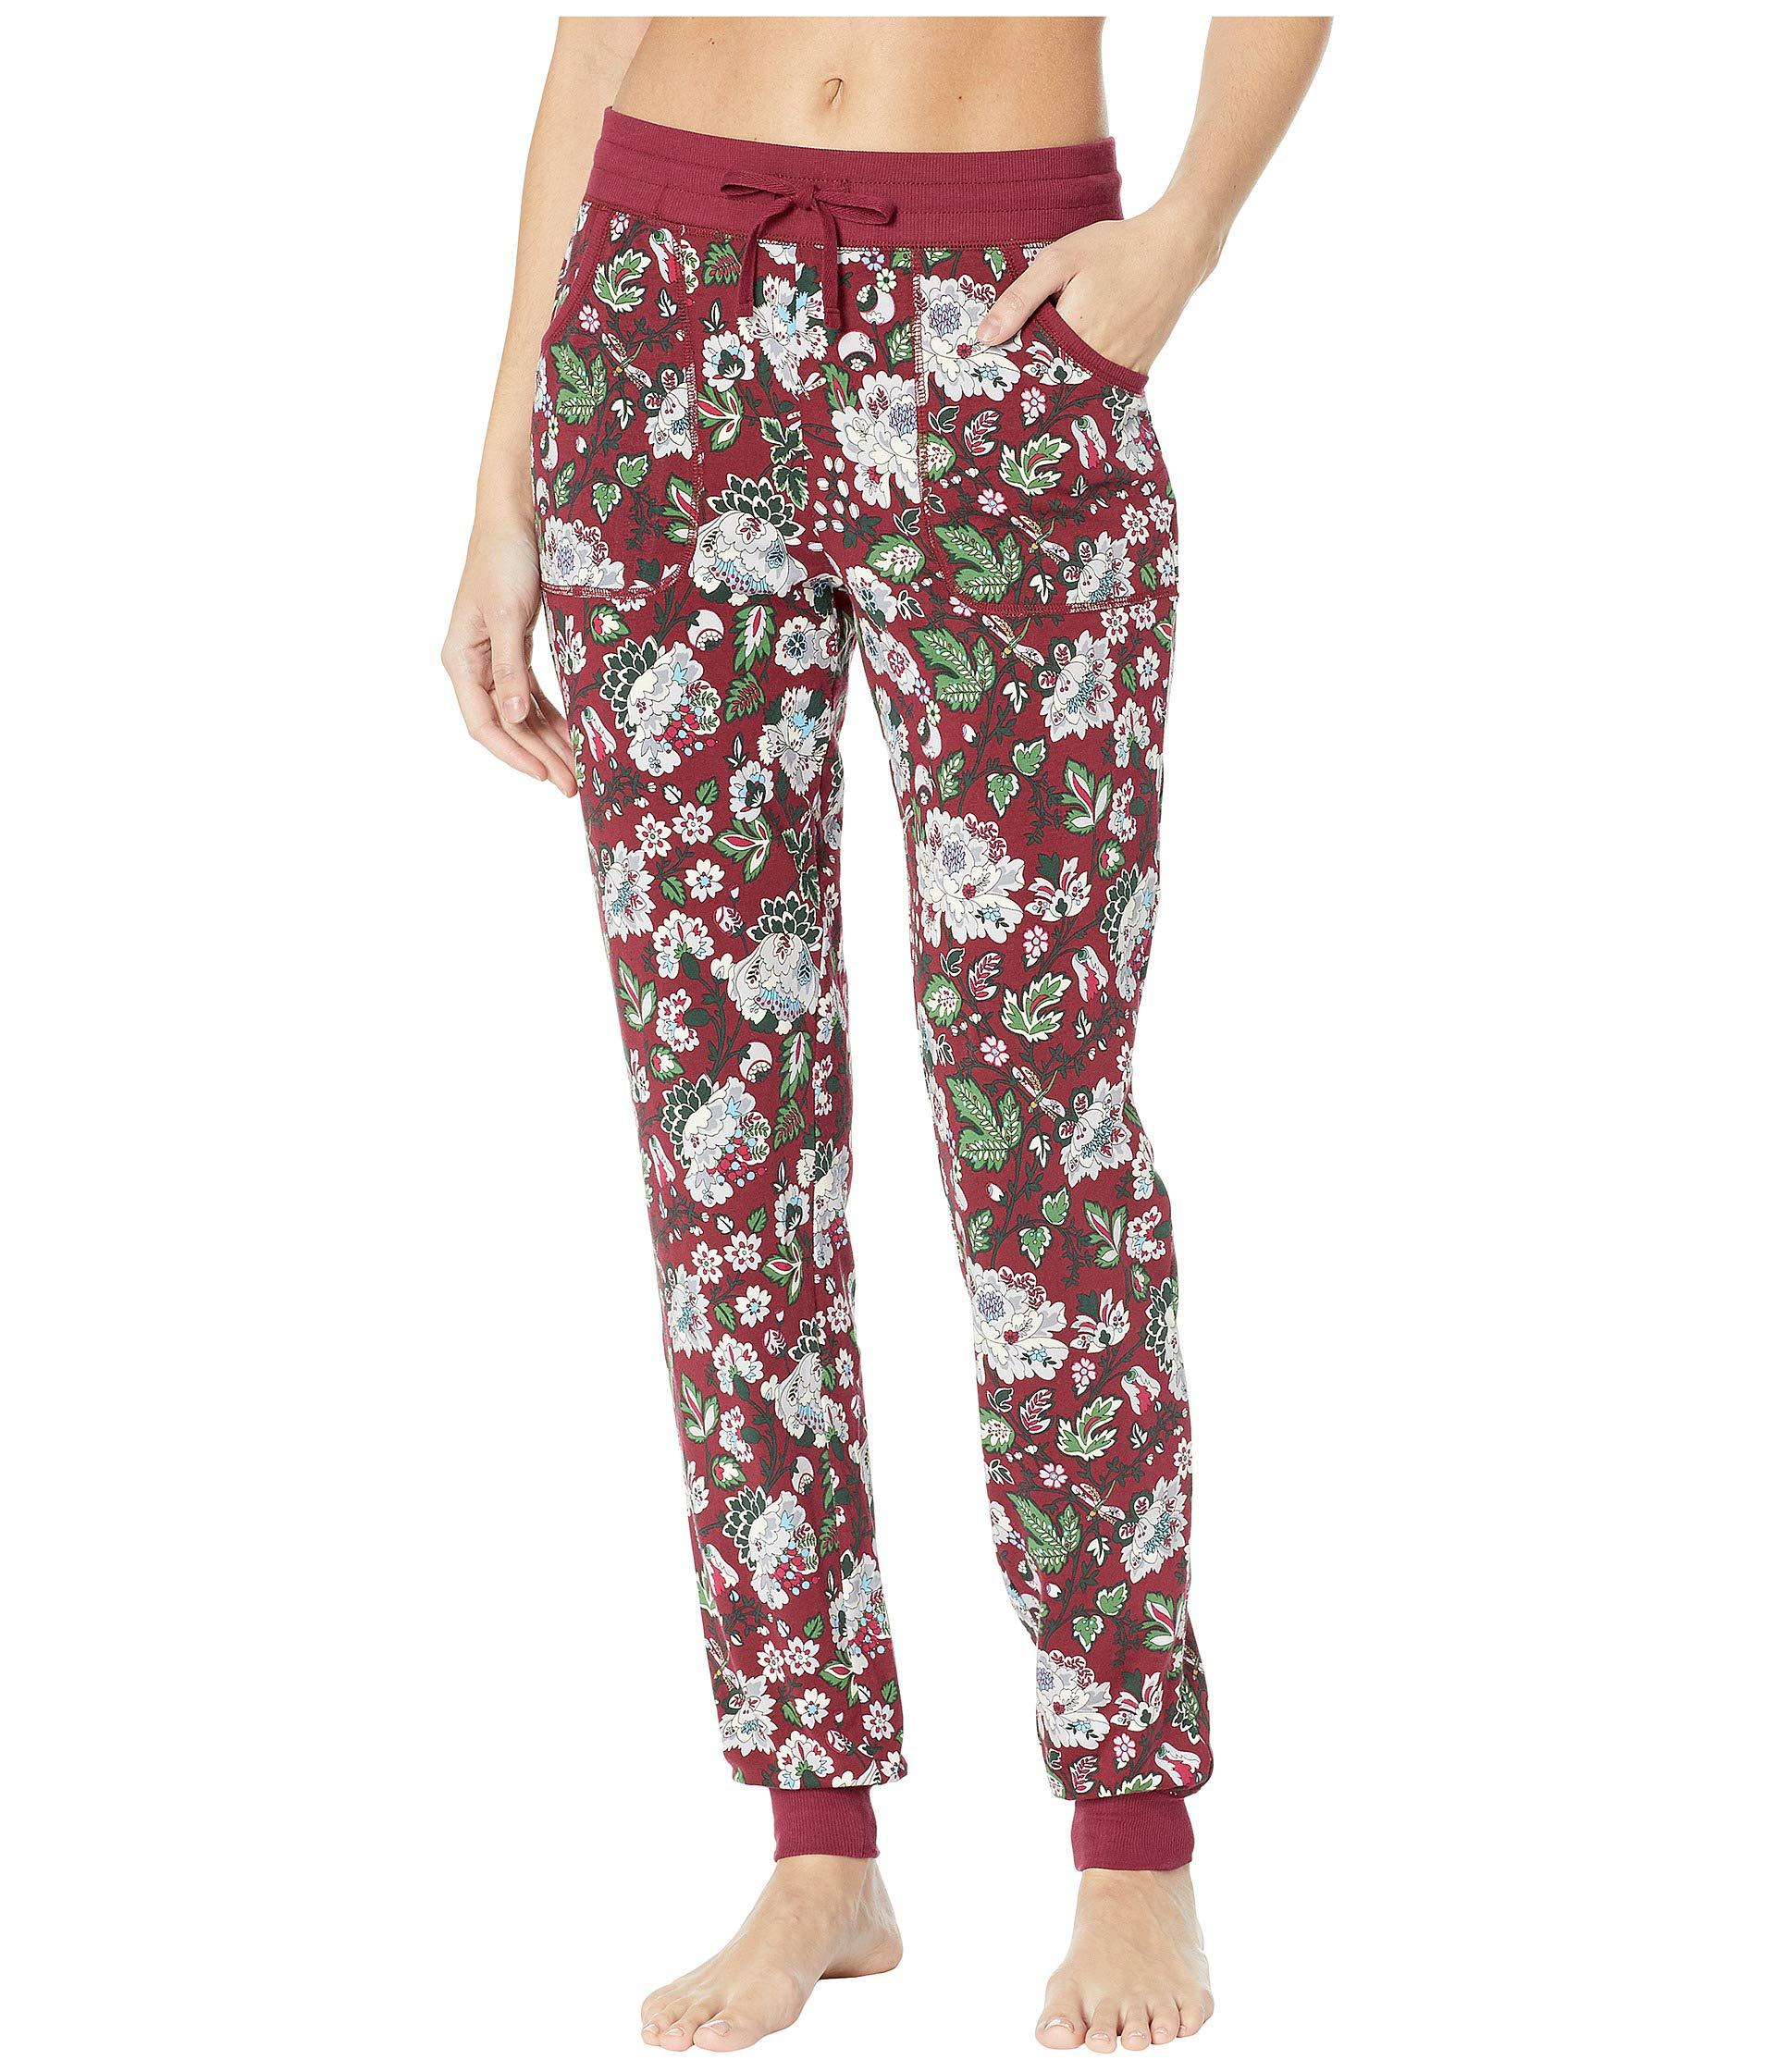 Lyst - Vera Bradley Pajama Pants (bordeaux Blooms) Women's Pajama